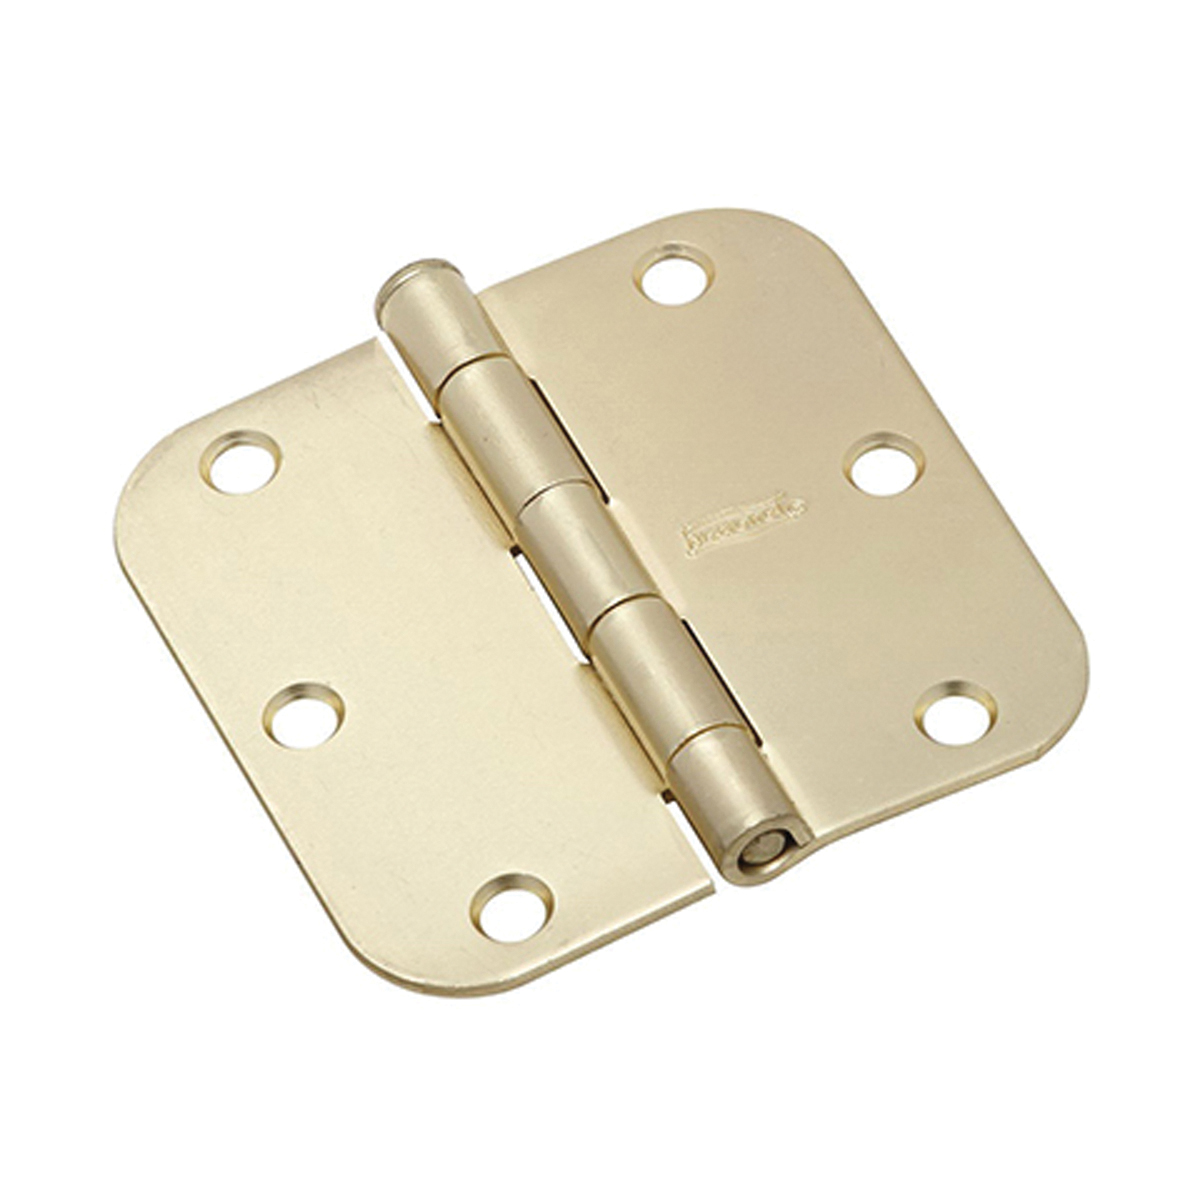 N830-224 Door Hinge, Steel, Satin Brass, Non-Rising, Removable Pin, Full-Mortise Mounting, 50 lb